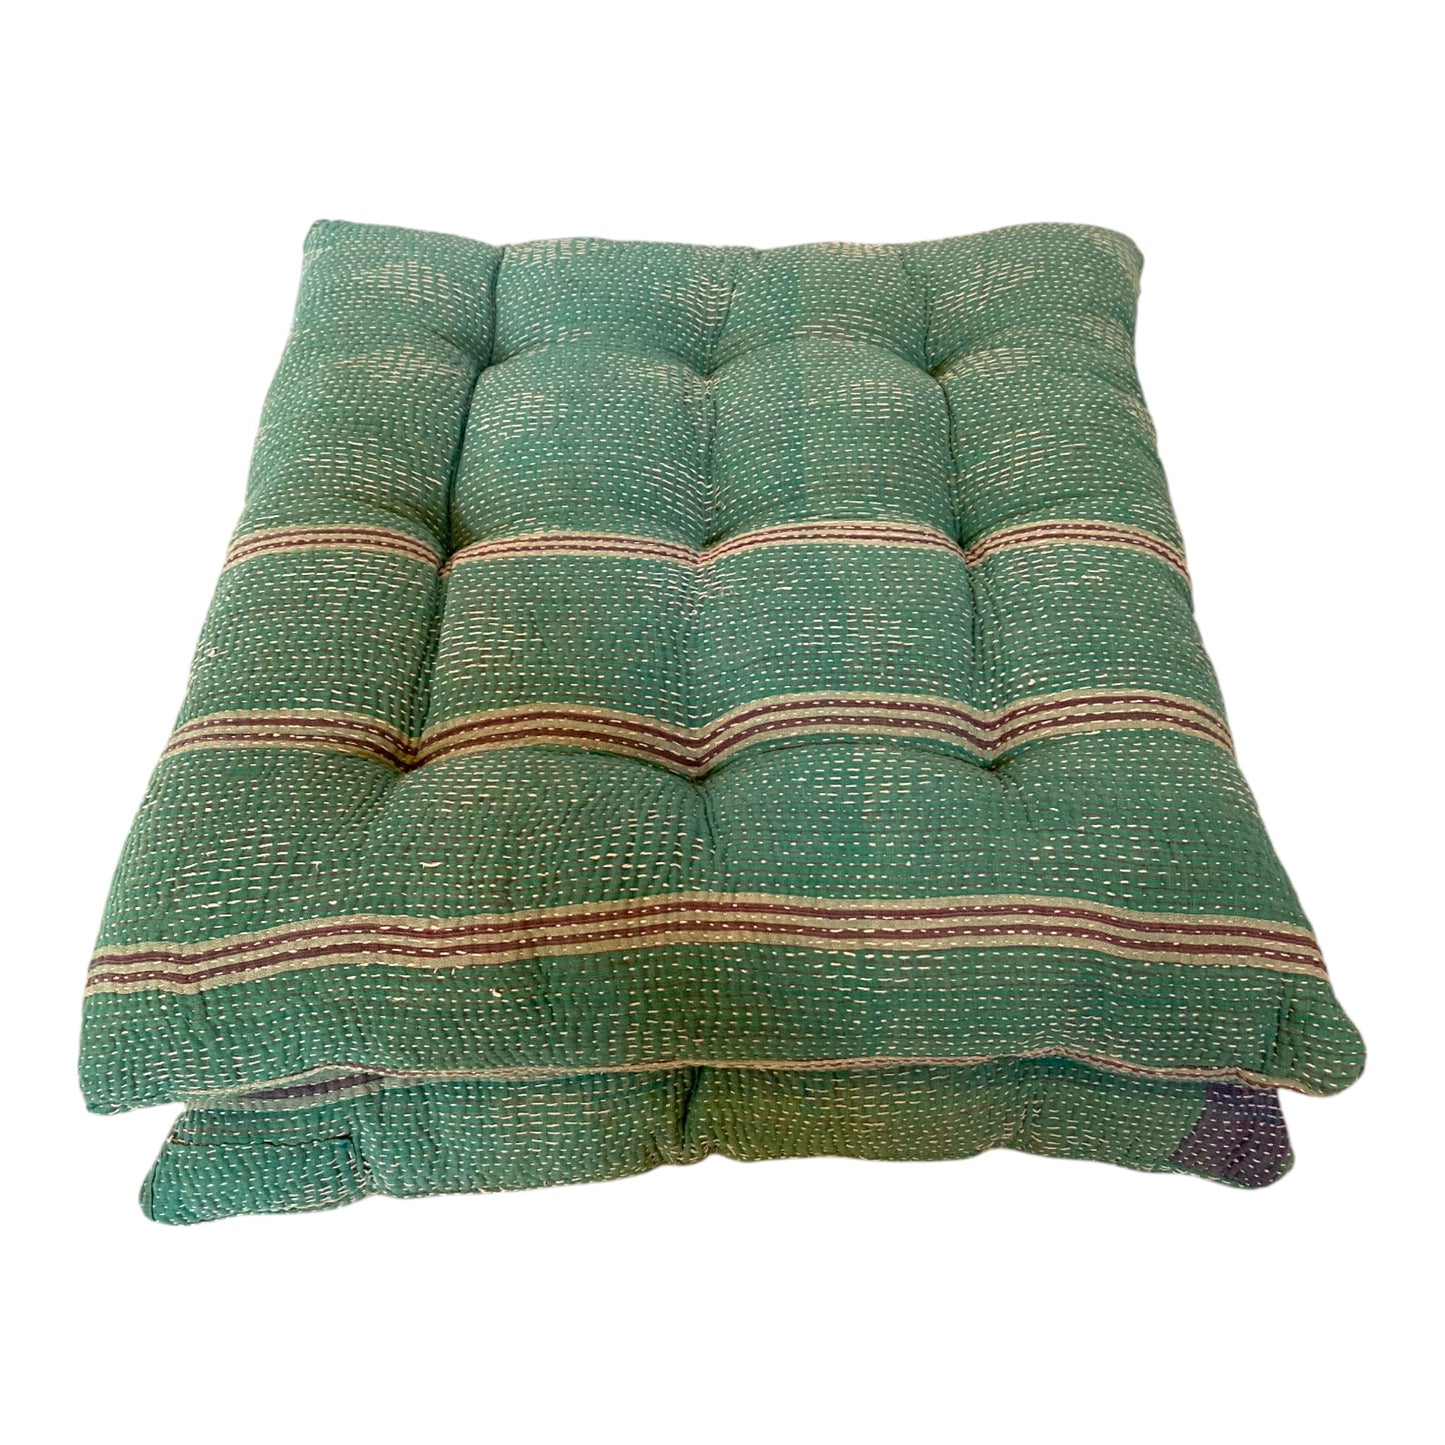 Green stripe kantha seat cushions